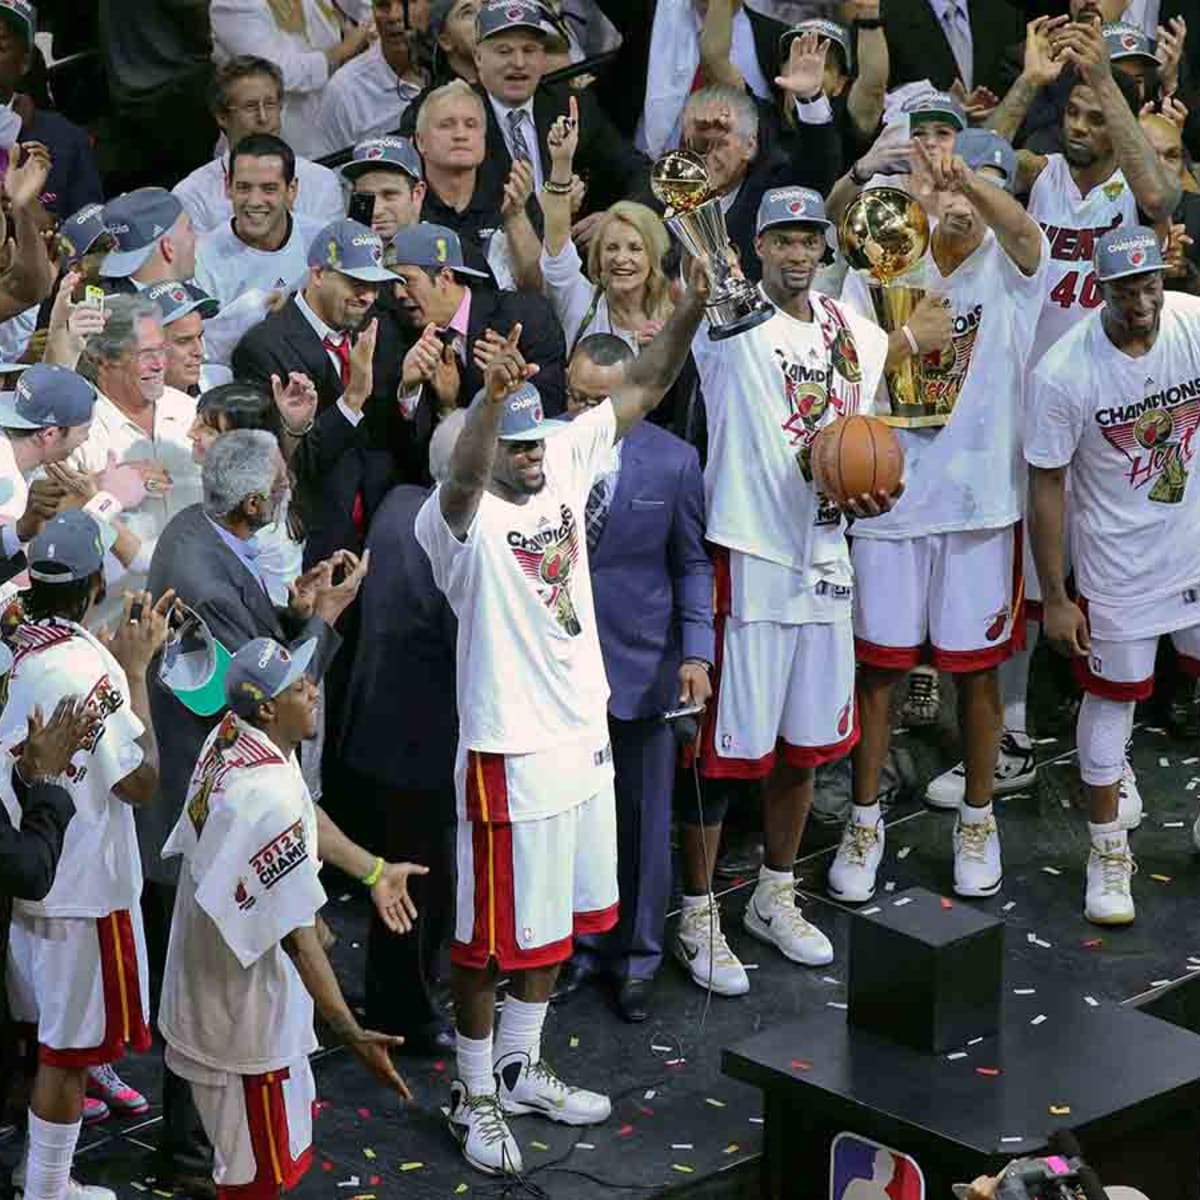 Why I picked Miami Heat to win NBA championship before season began